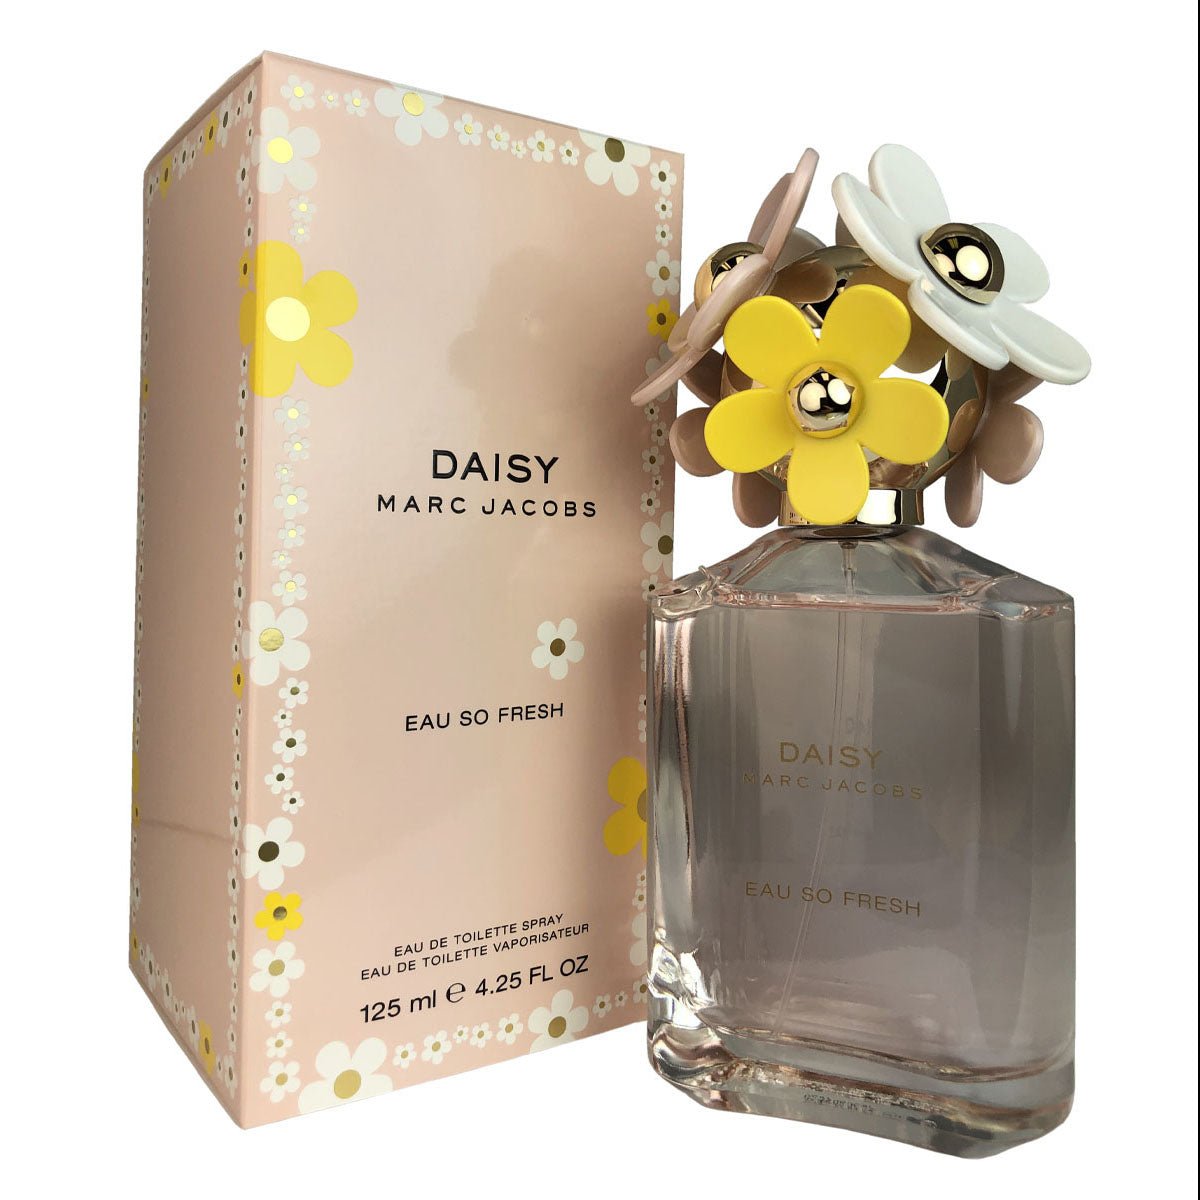 Daisy Eau So Fresh for Women by Marc Jacobs 4.2 oz Eau de Toilette Spray